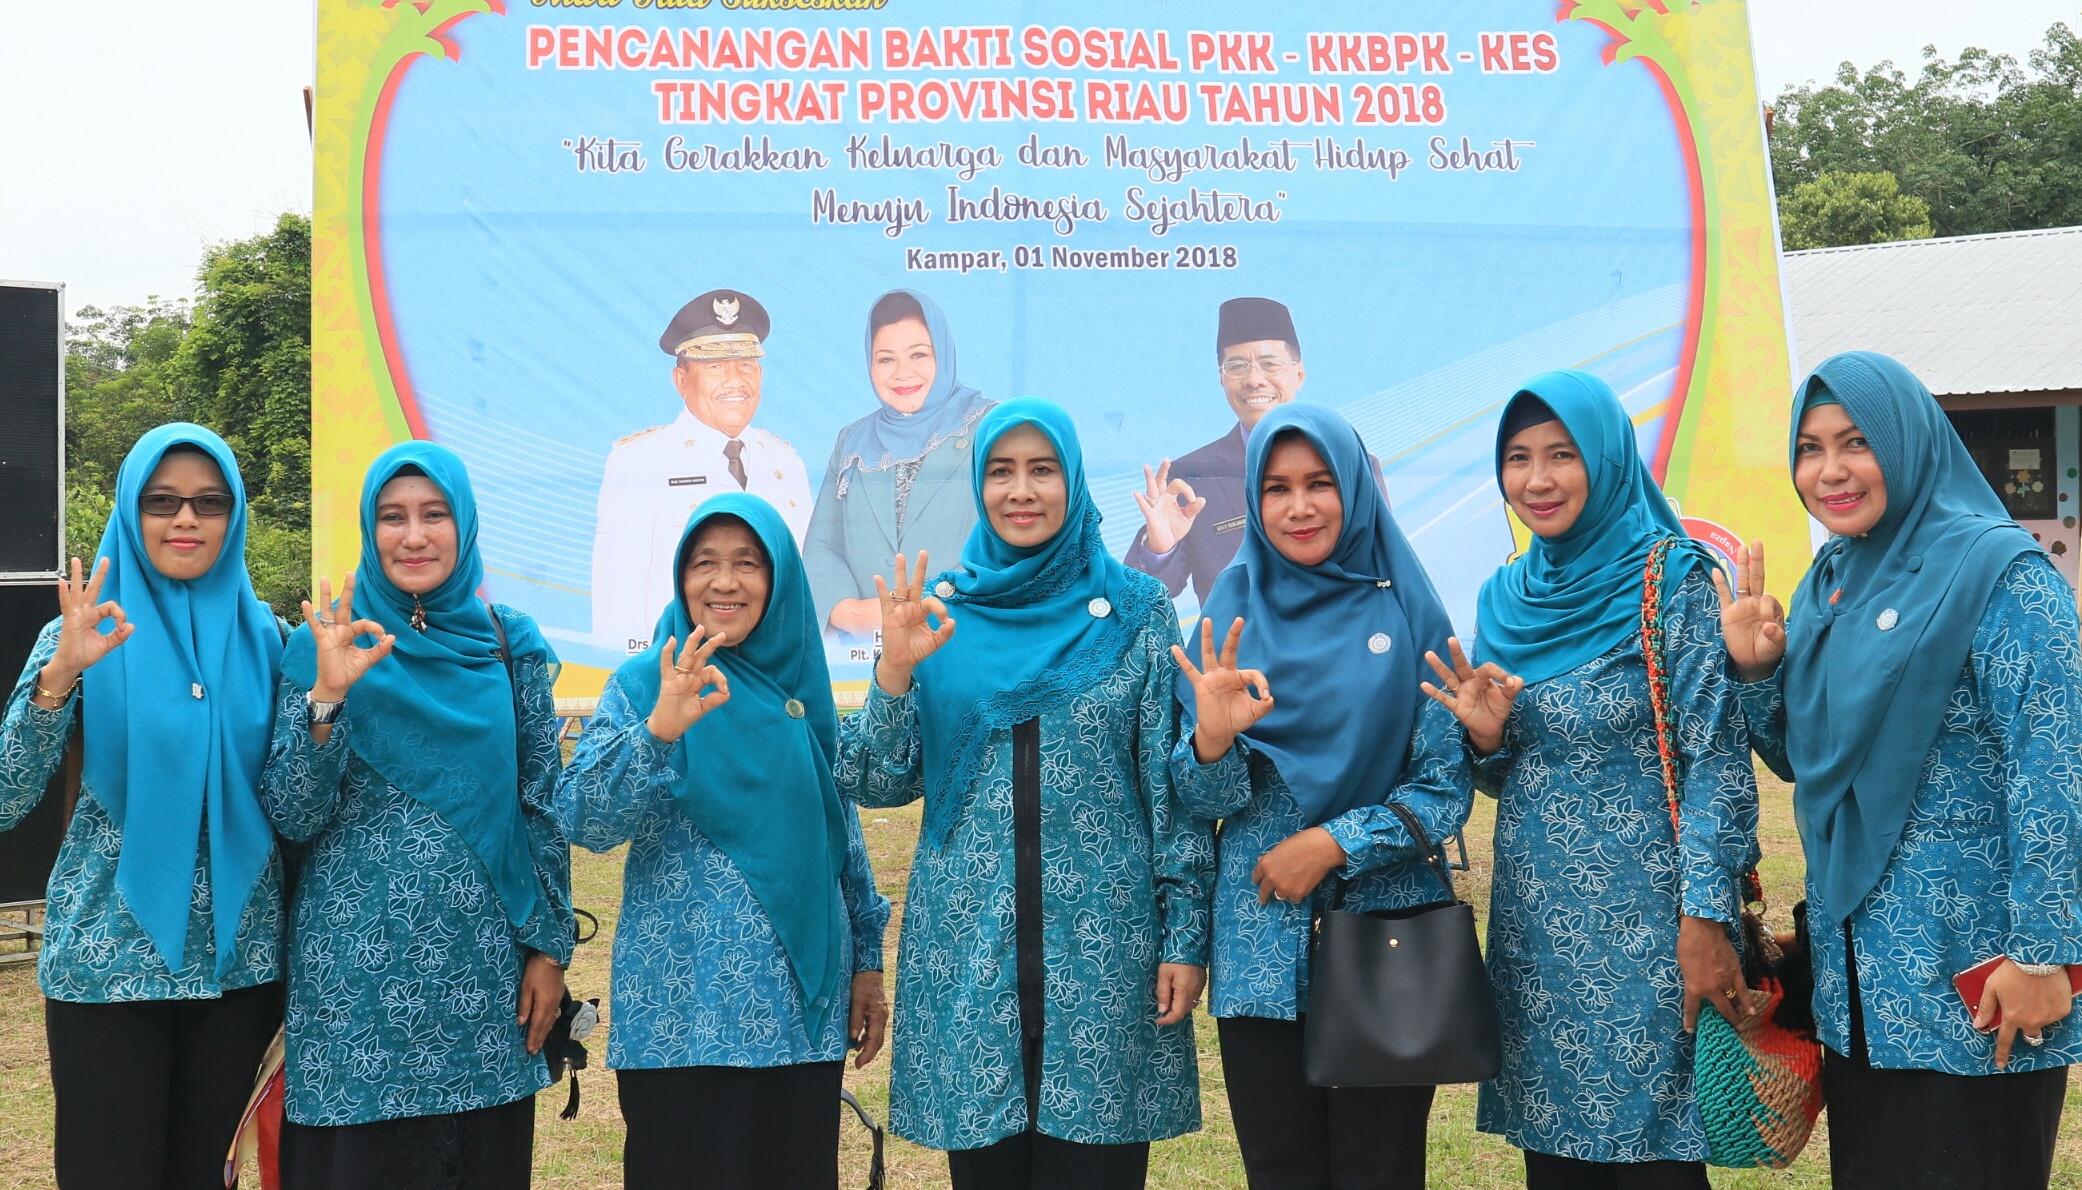 Tim Penggerak PKK Inhil Hadiri Pencanangan Bakti Sosial (PKK-KKBPK-KES) Provinsi Riau